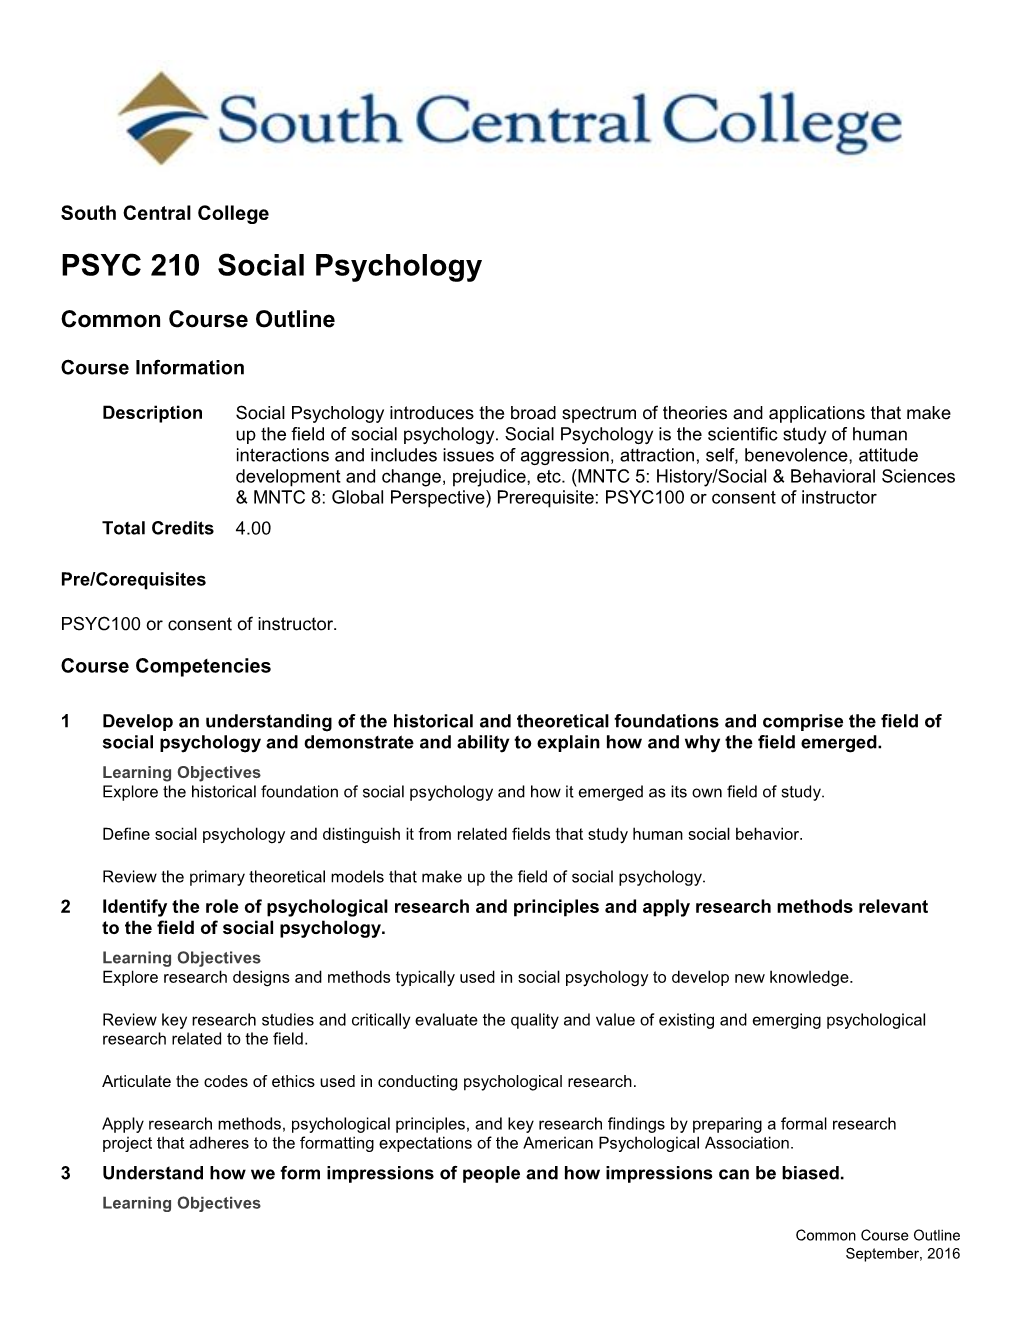 PSYC 210 Social Psychology